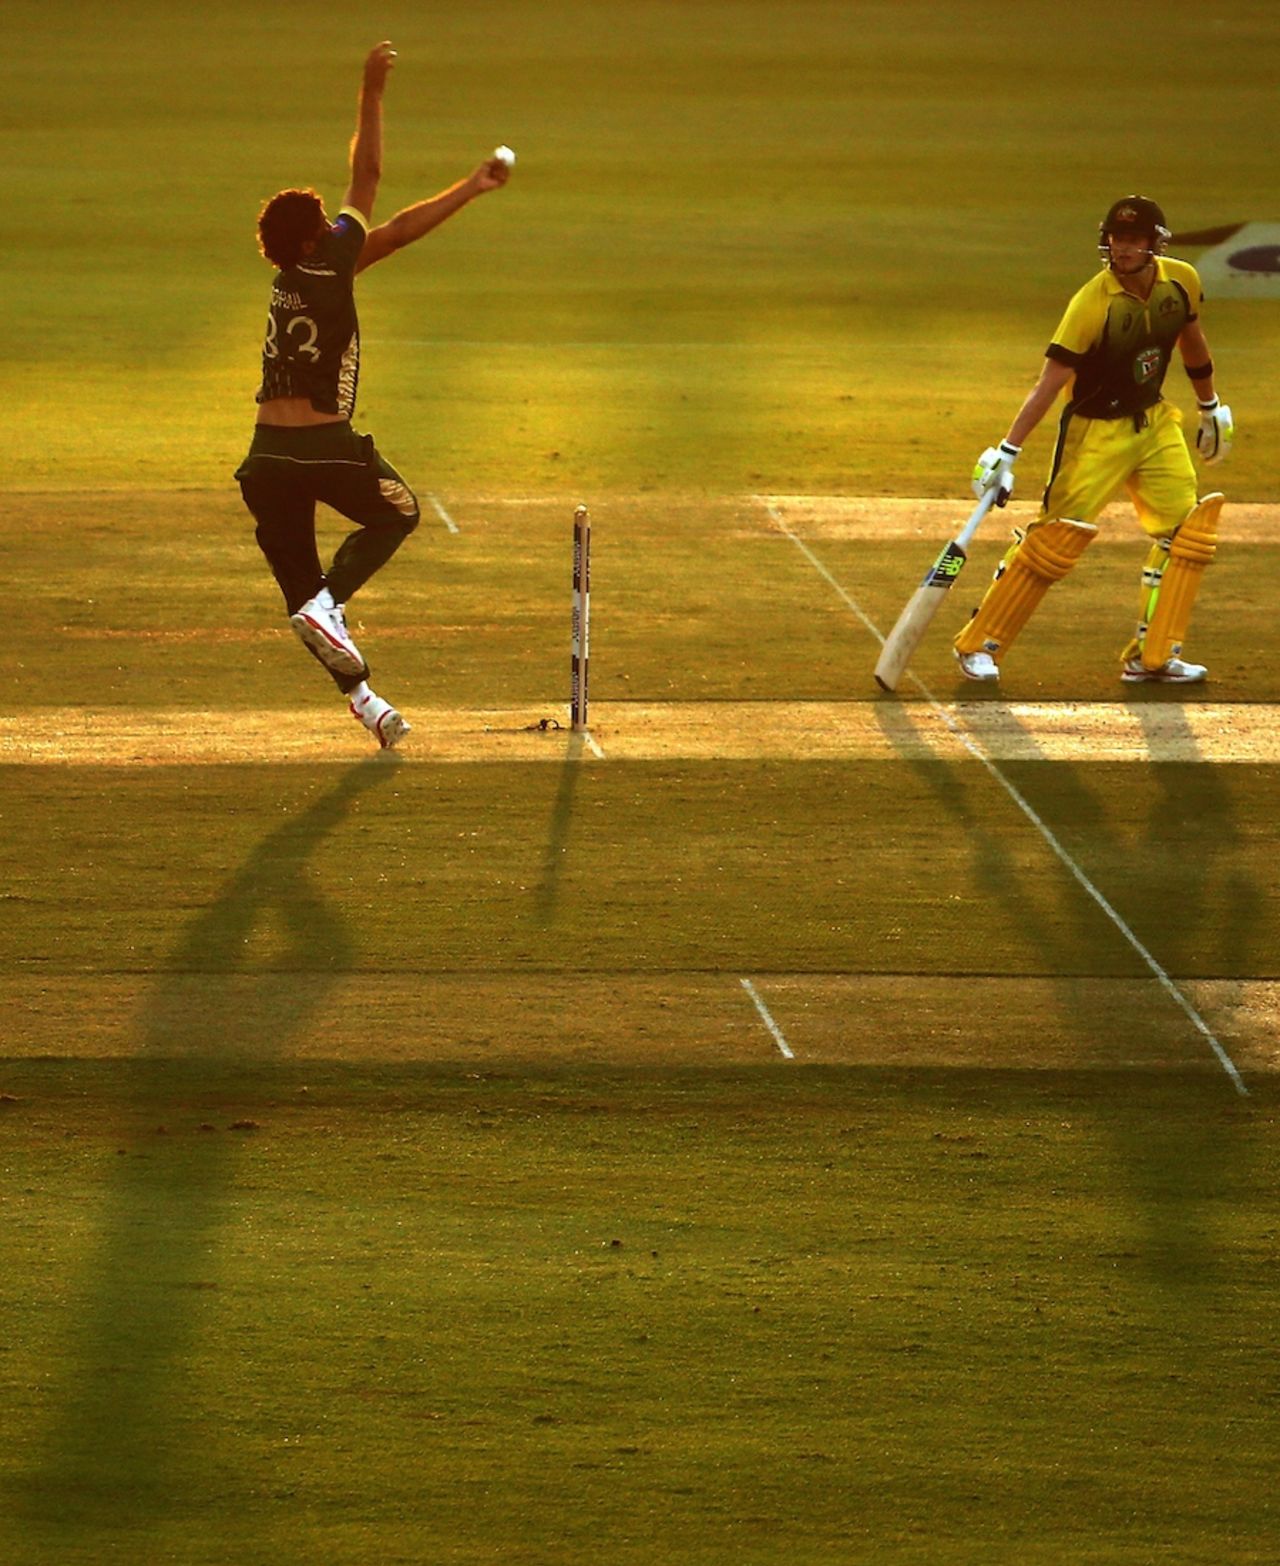 Sohail Tanvir bowls as Steven Smith looks on, Pakistan v Australia, 3rd ODI, Abu Dhabi, October 12, 2014